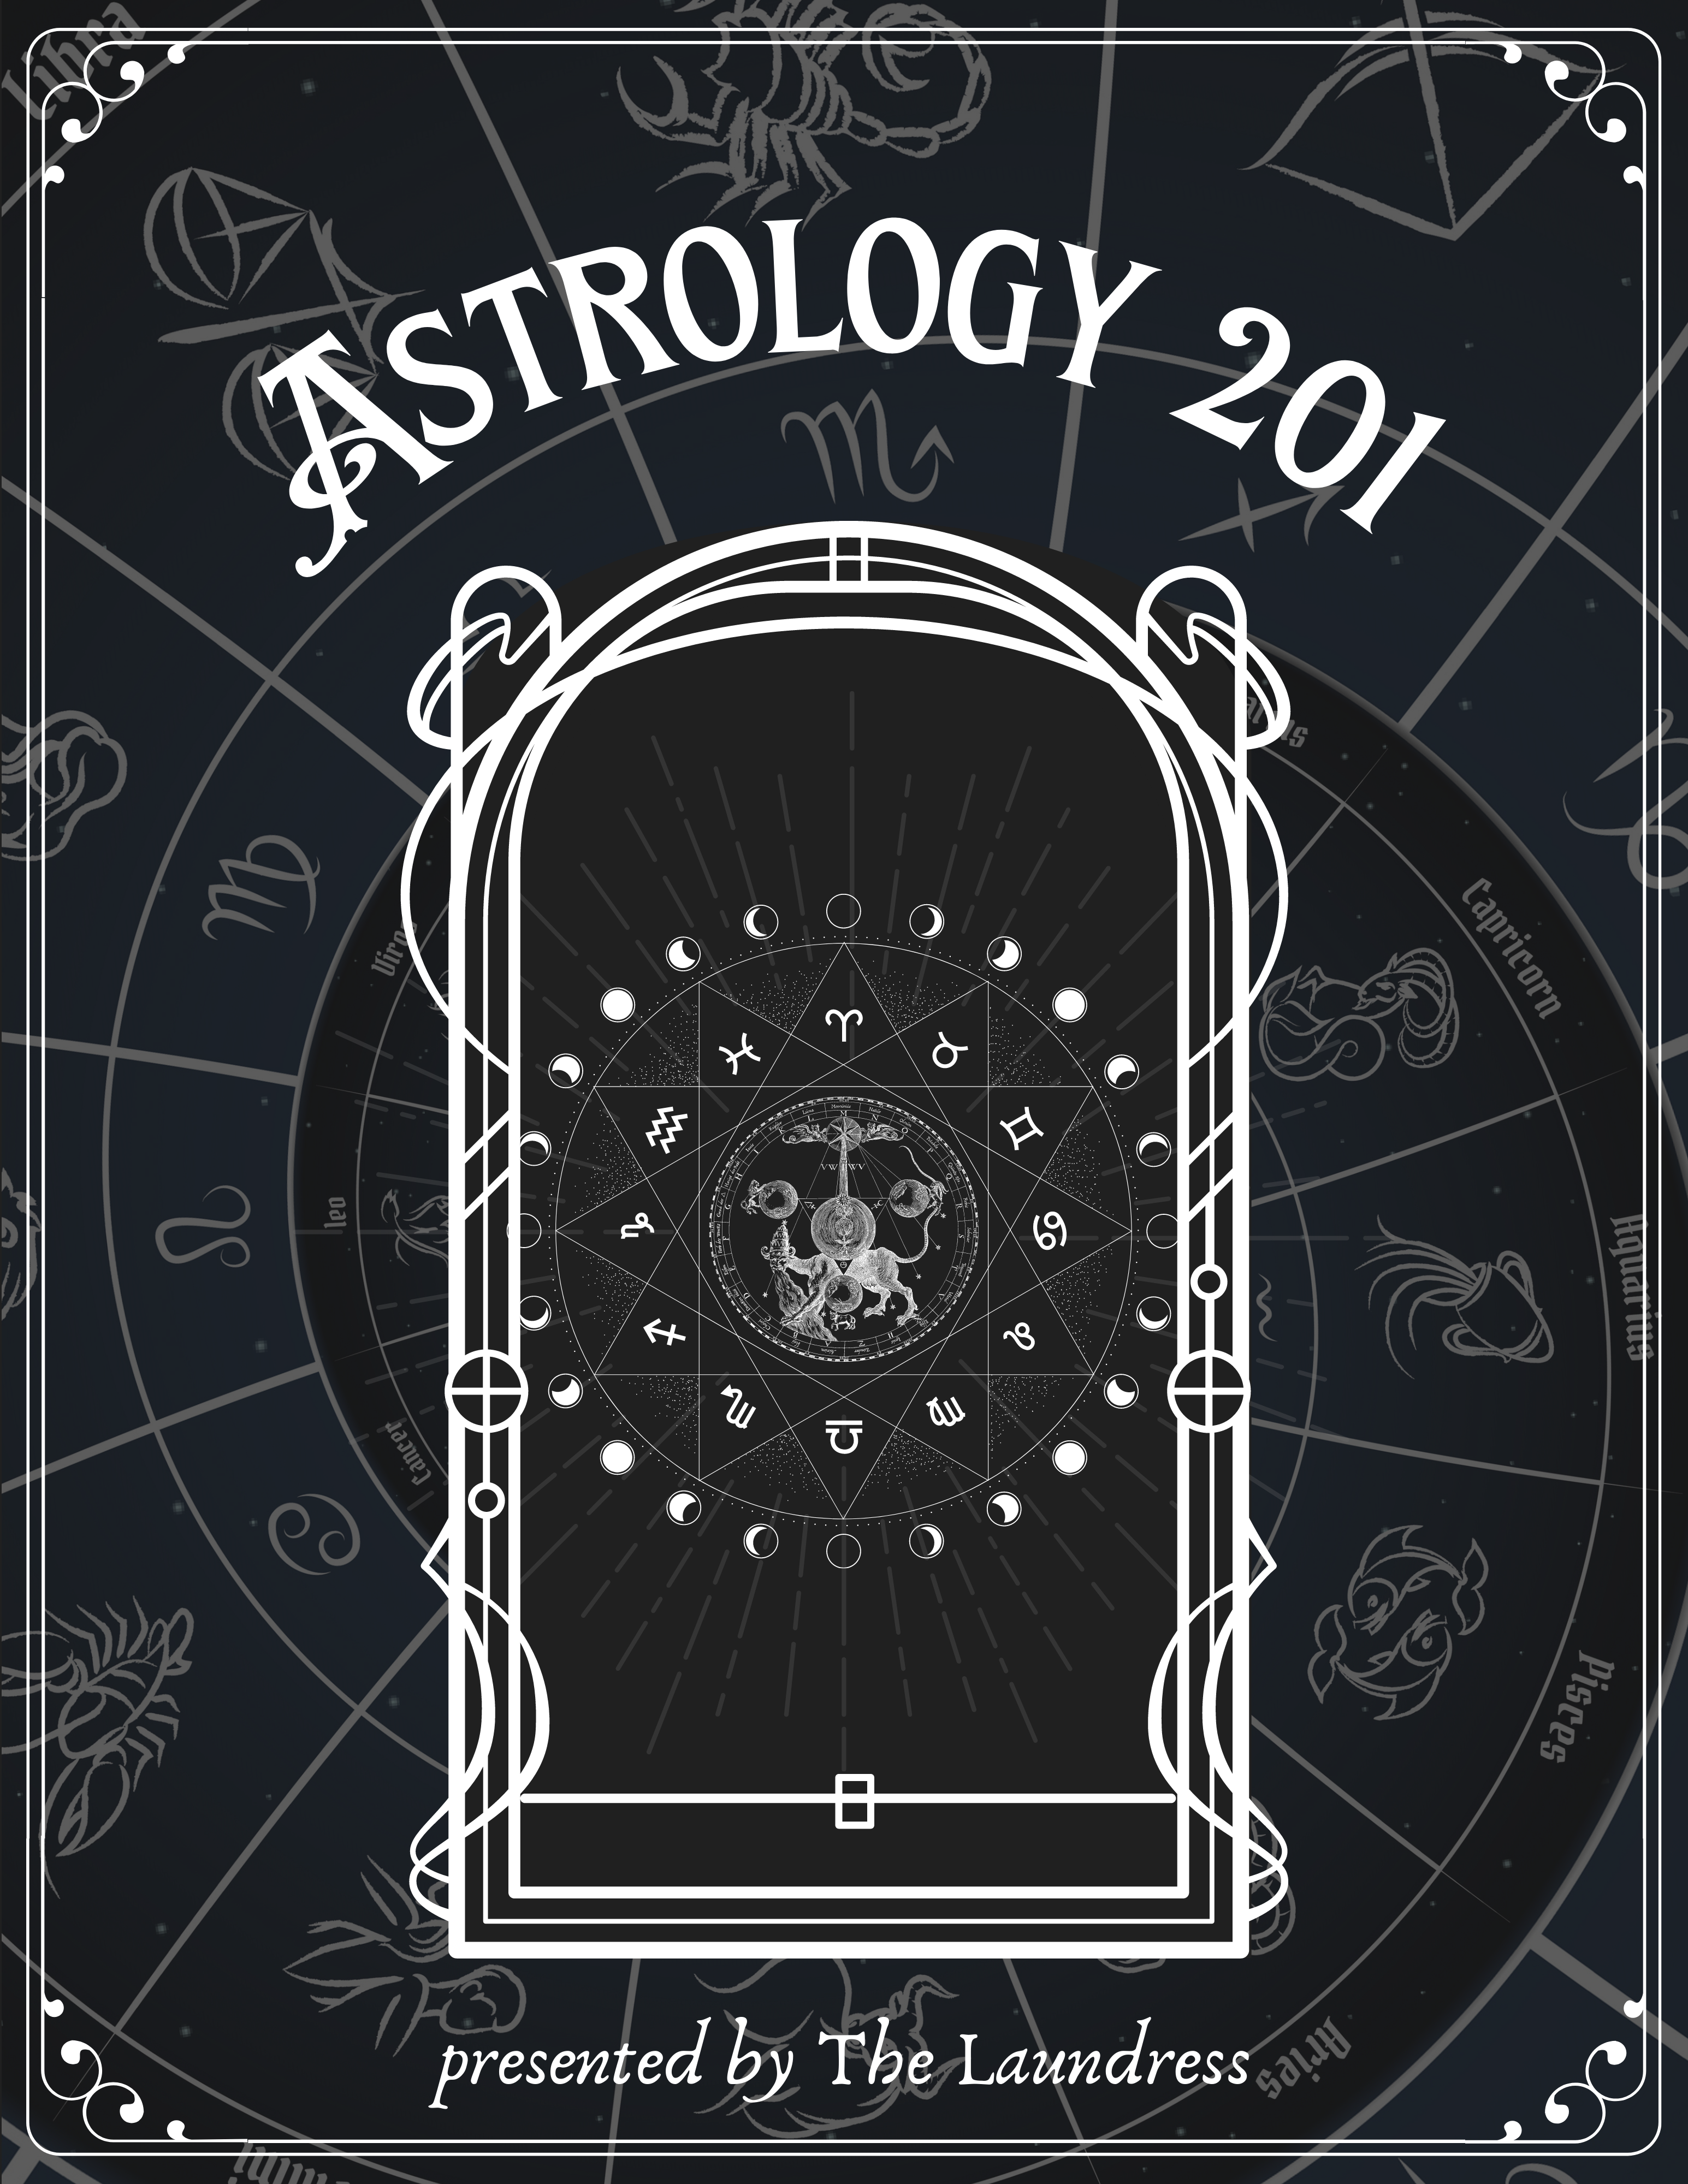 Astrology 201 clock on astrological wheel